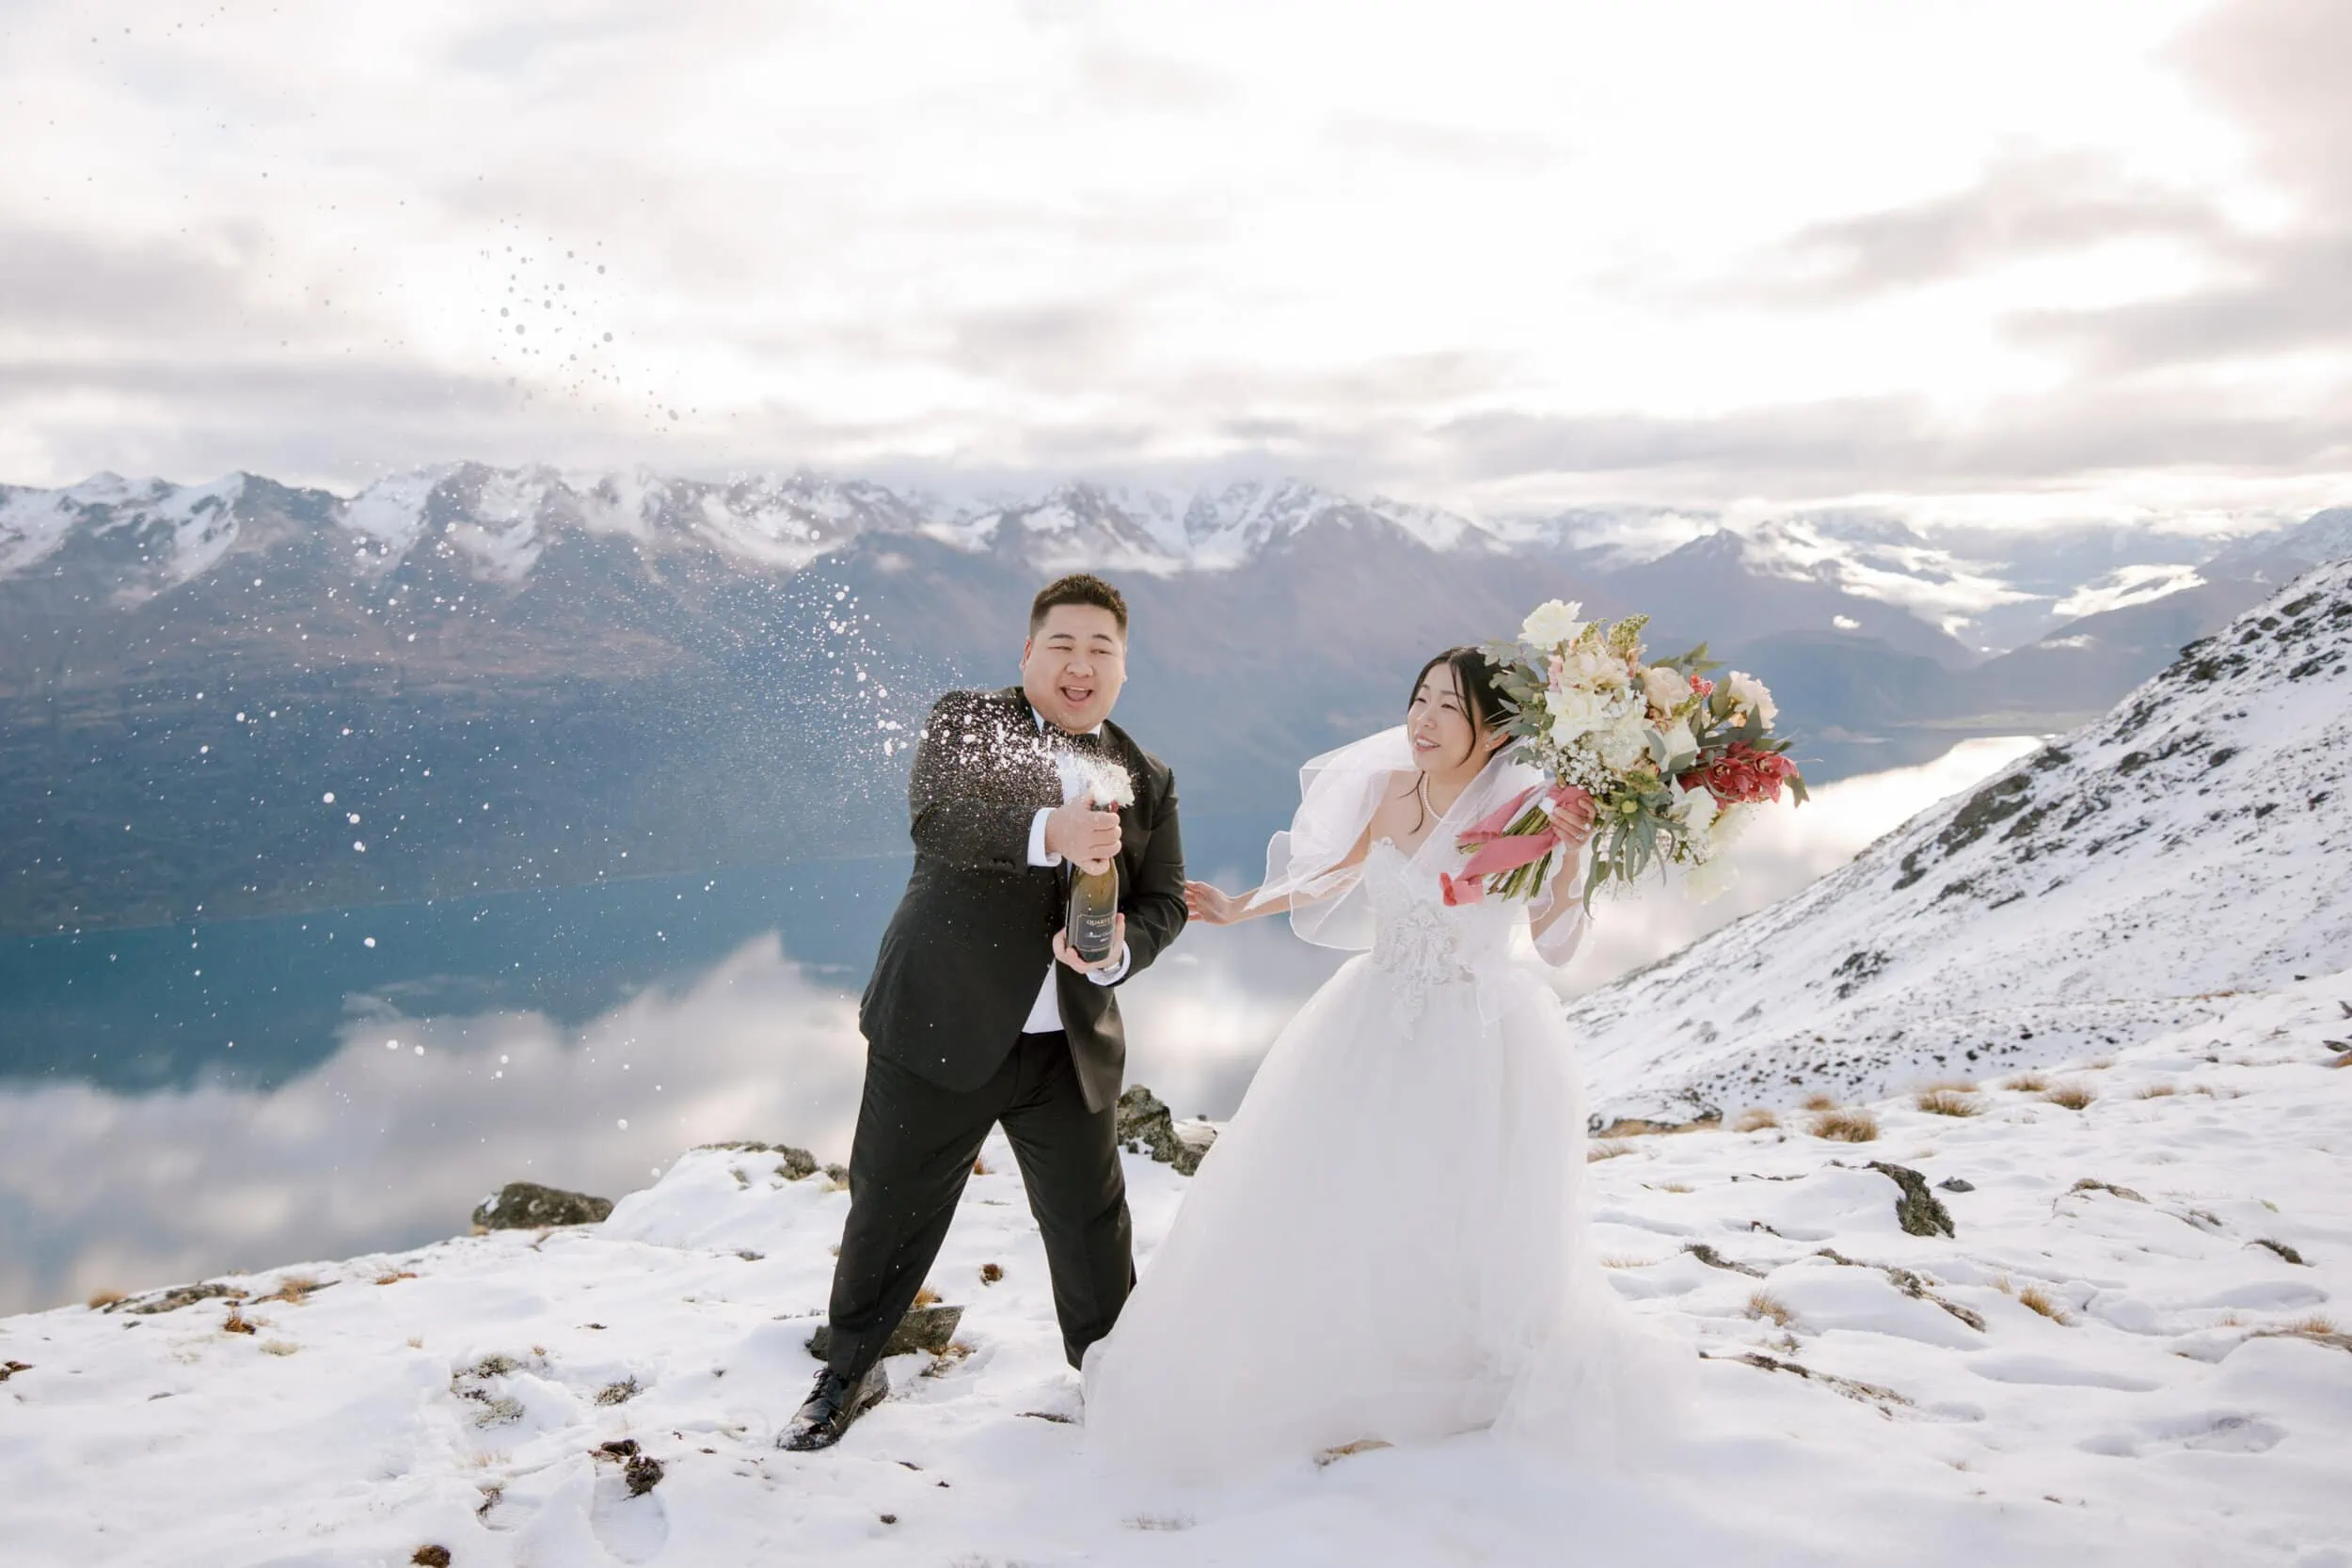 Queenstown New Zealand Elopement Wedding Photographer - Lam and Wendy's snowy mountain wedding.